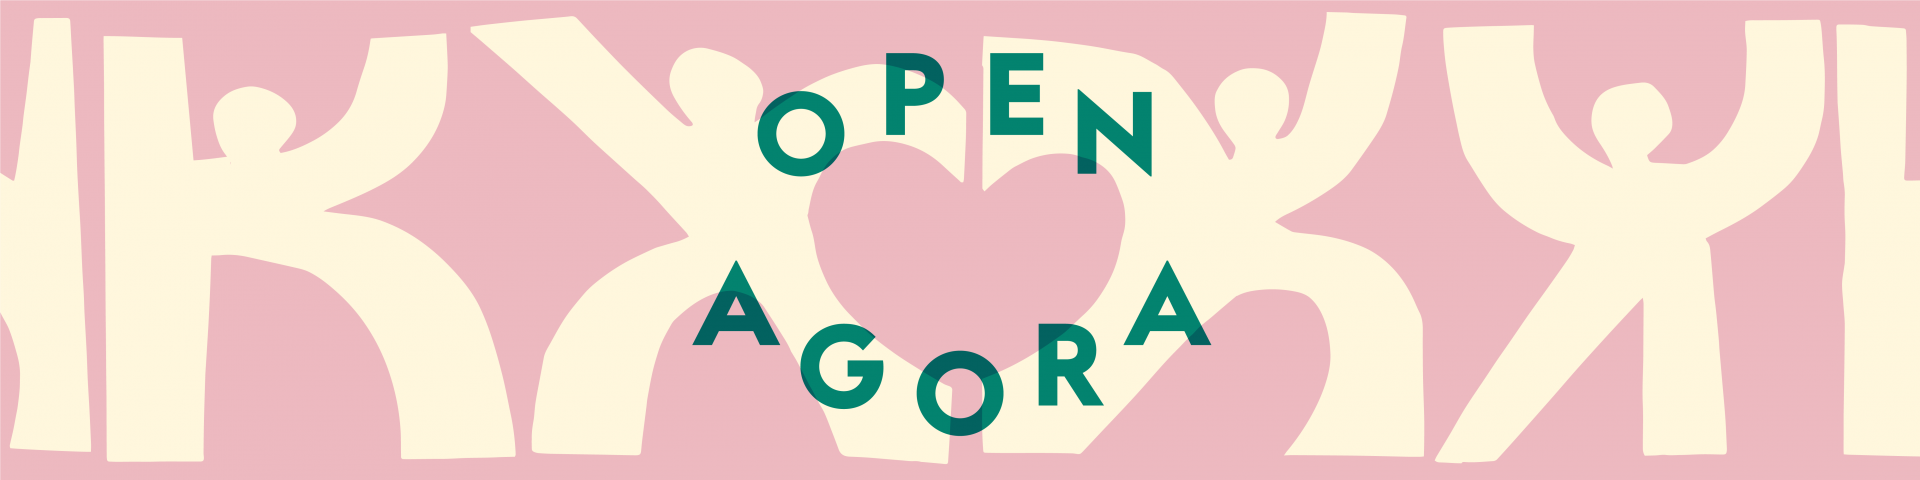 OPEN CALL | 2nd Open Agora: Child, Family  - Εικόνα